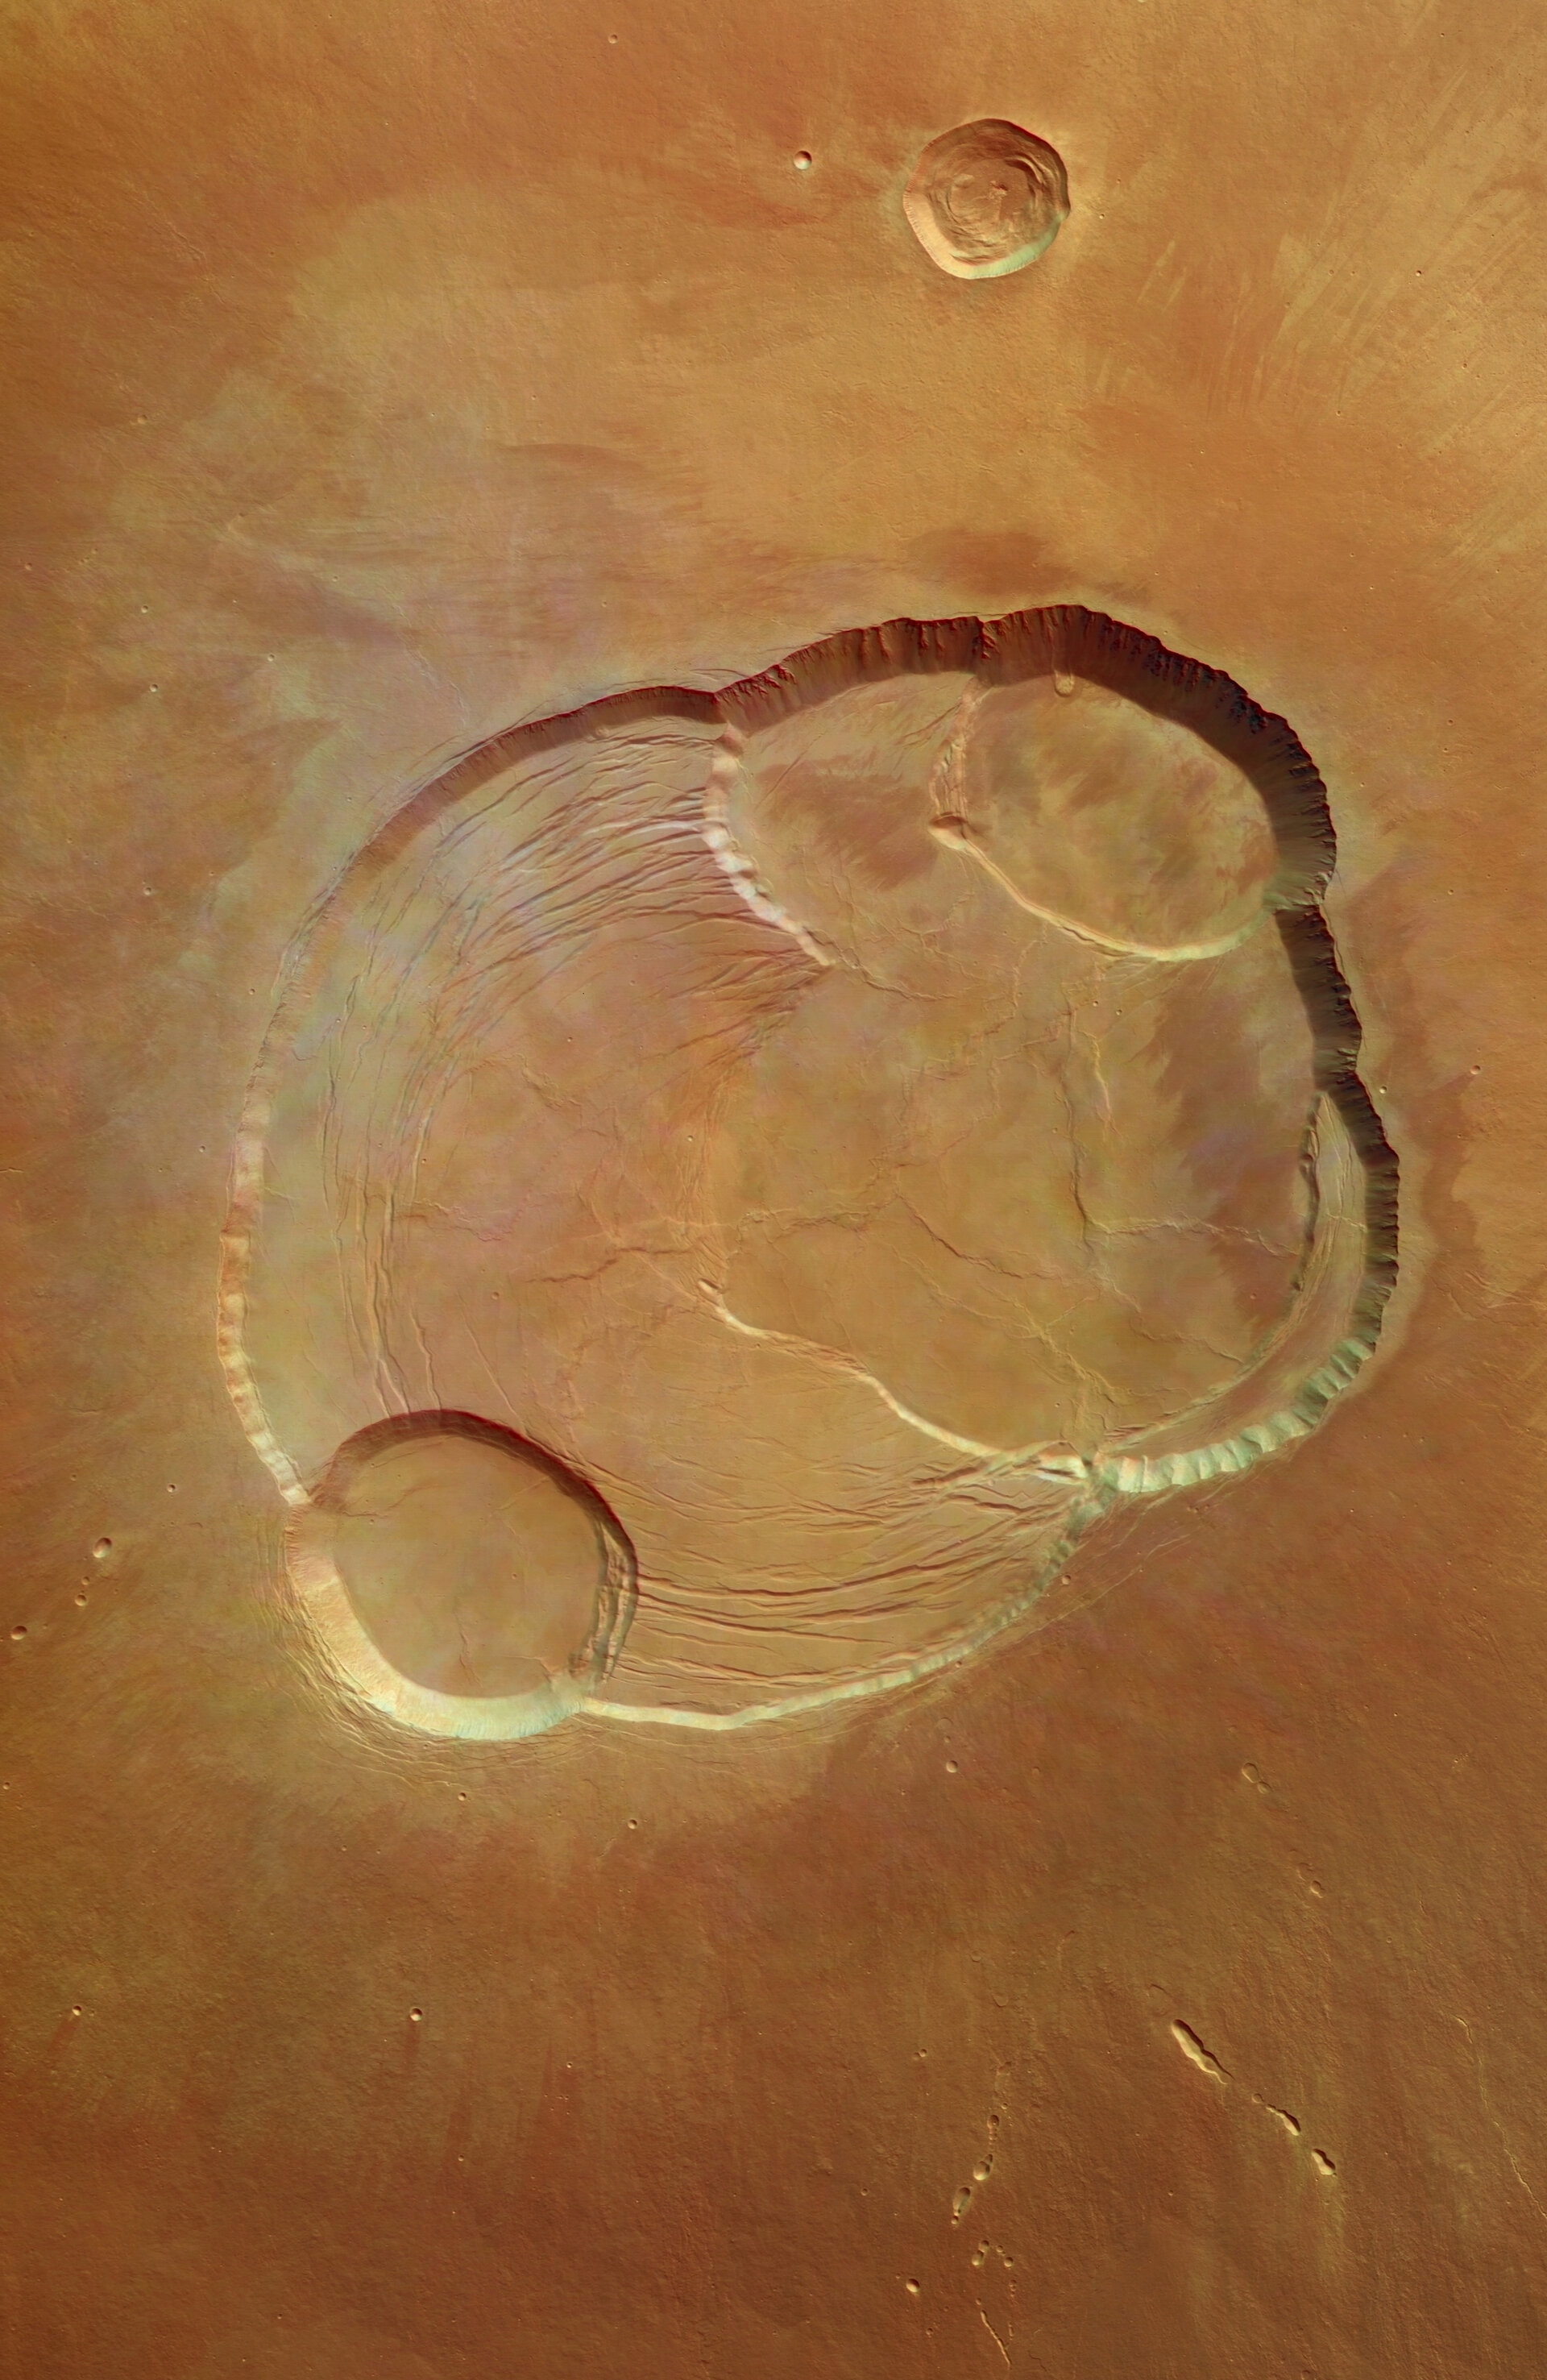 Complex caldera of Olympus Mons - Mars Express